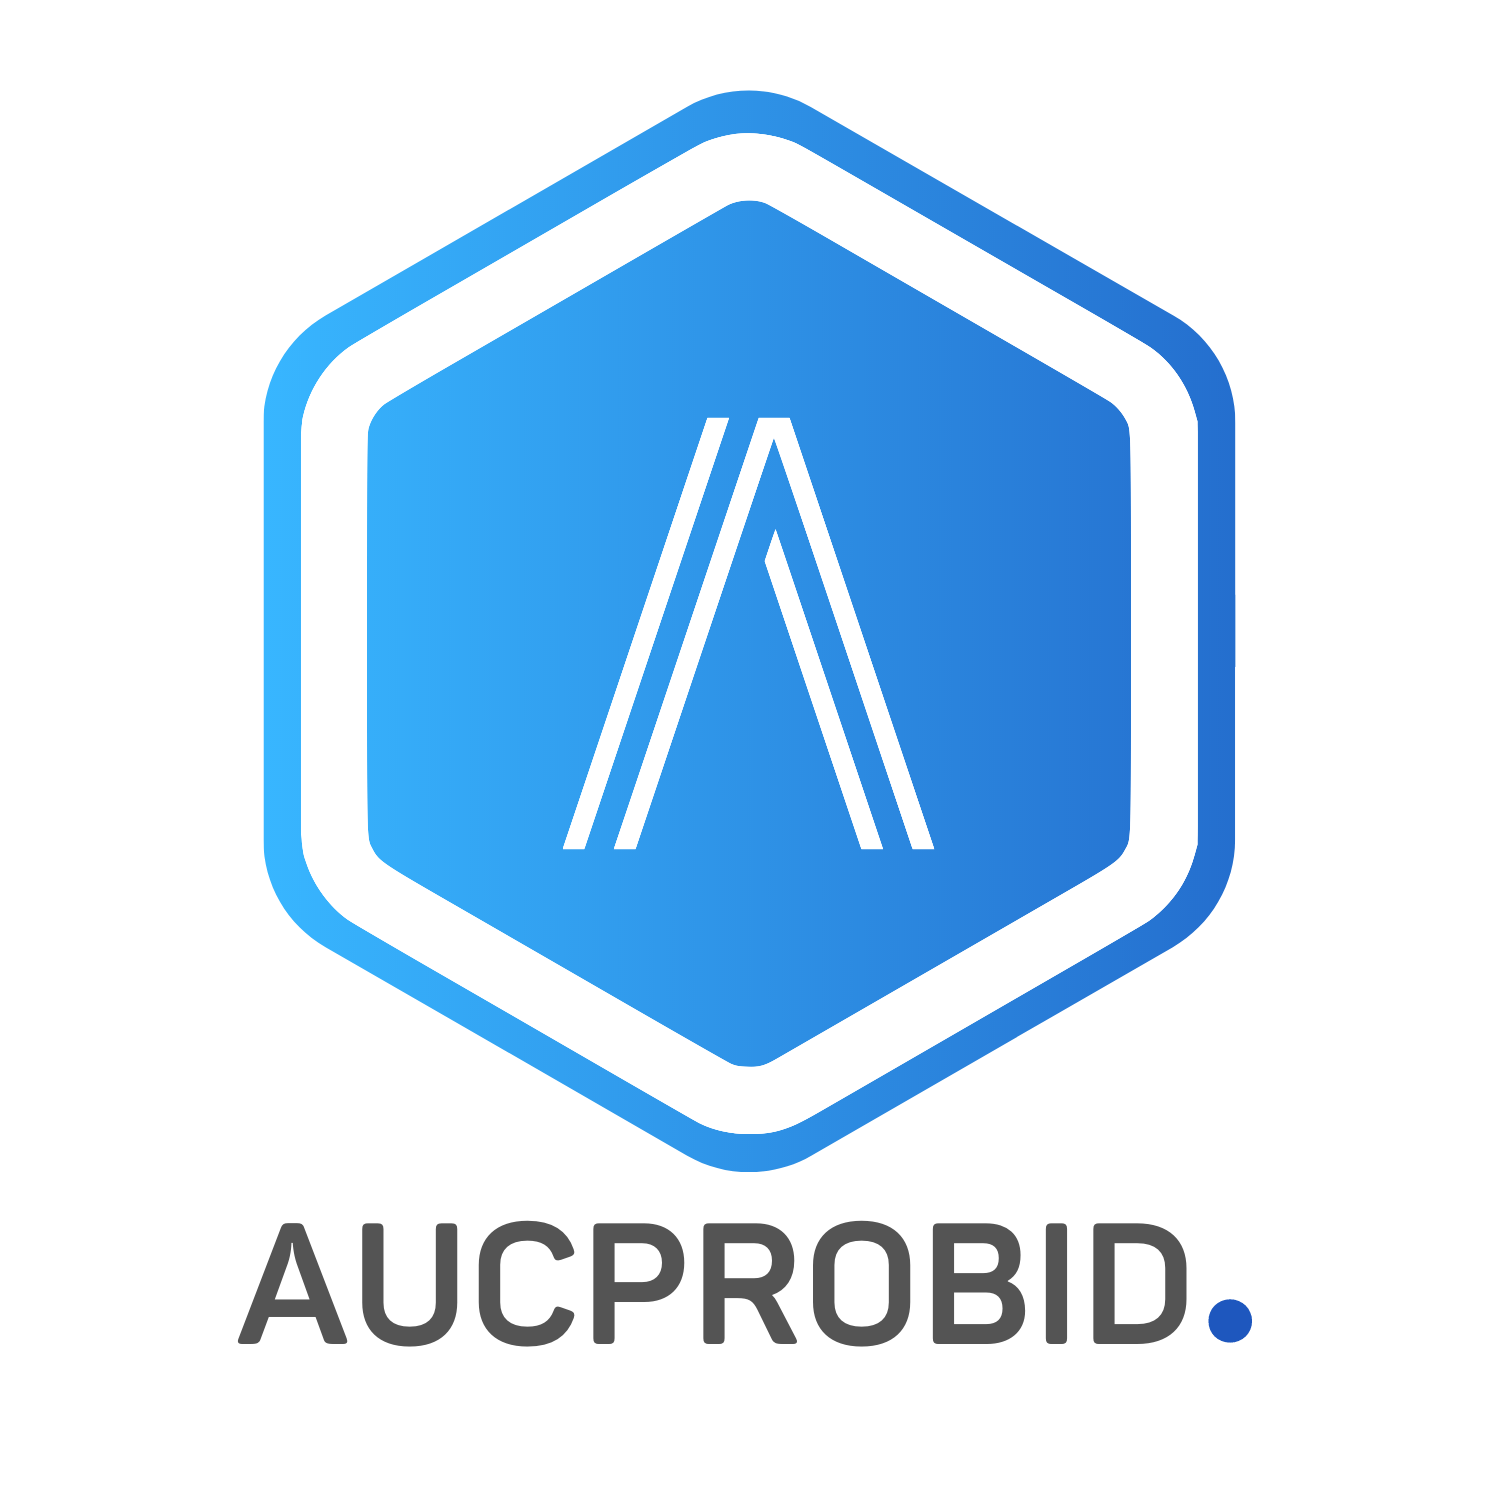 AucProBid